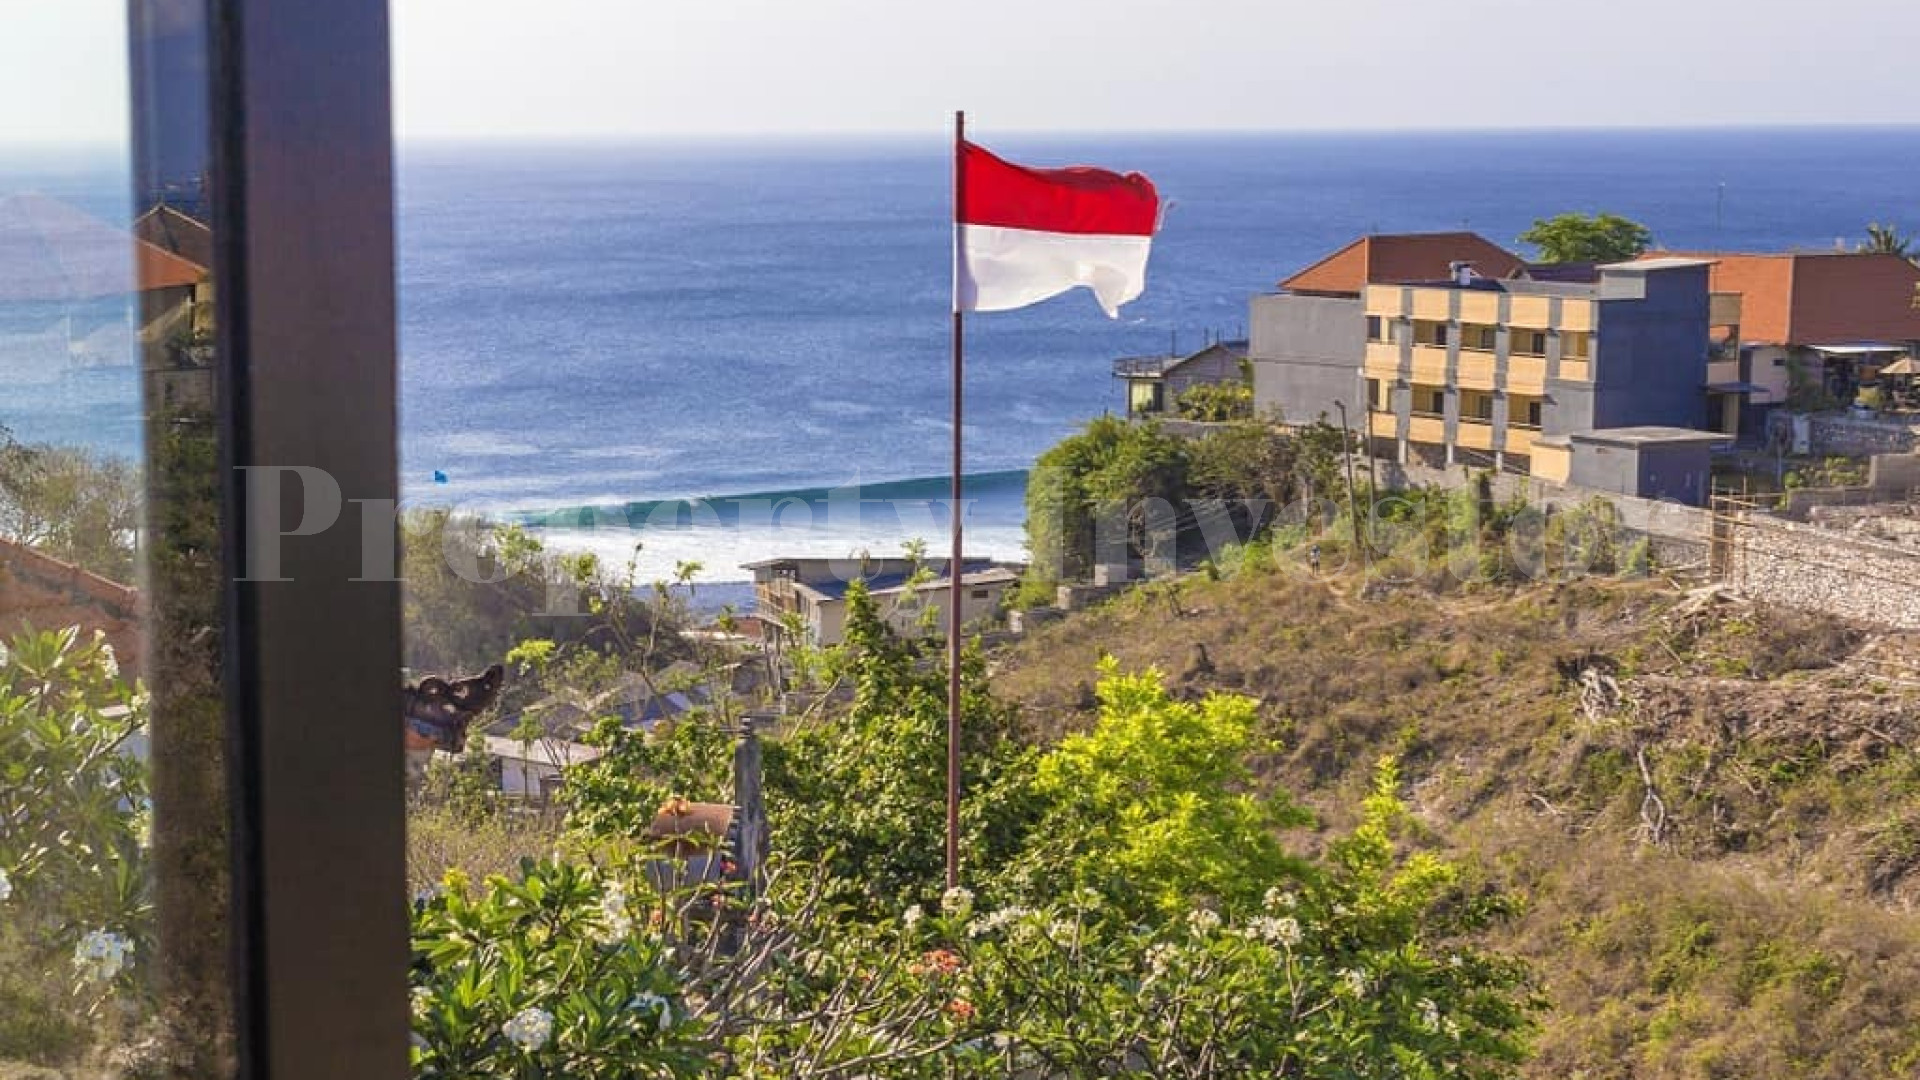 Stunning 4 Bedroom Modern Villa with Panoramic Ocean Views for Sale in Uluwatu, Bali